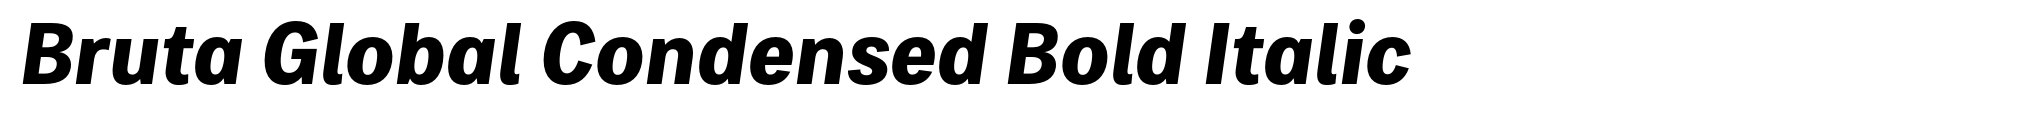 Bruta Global Condensed Bold Italic image